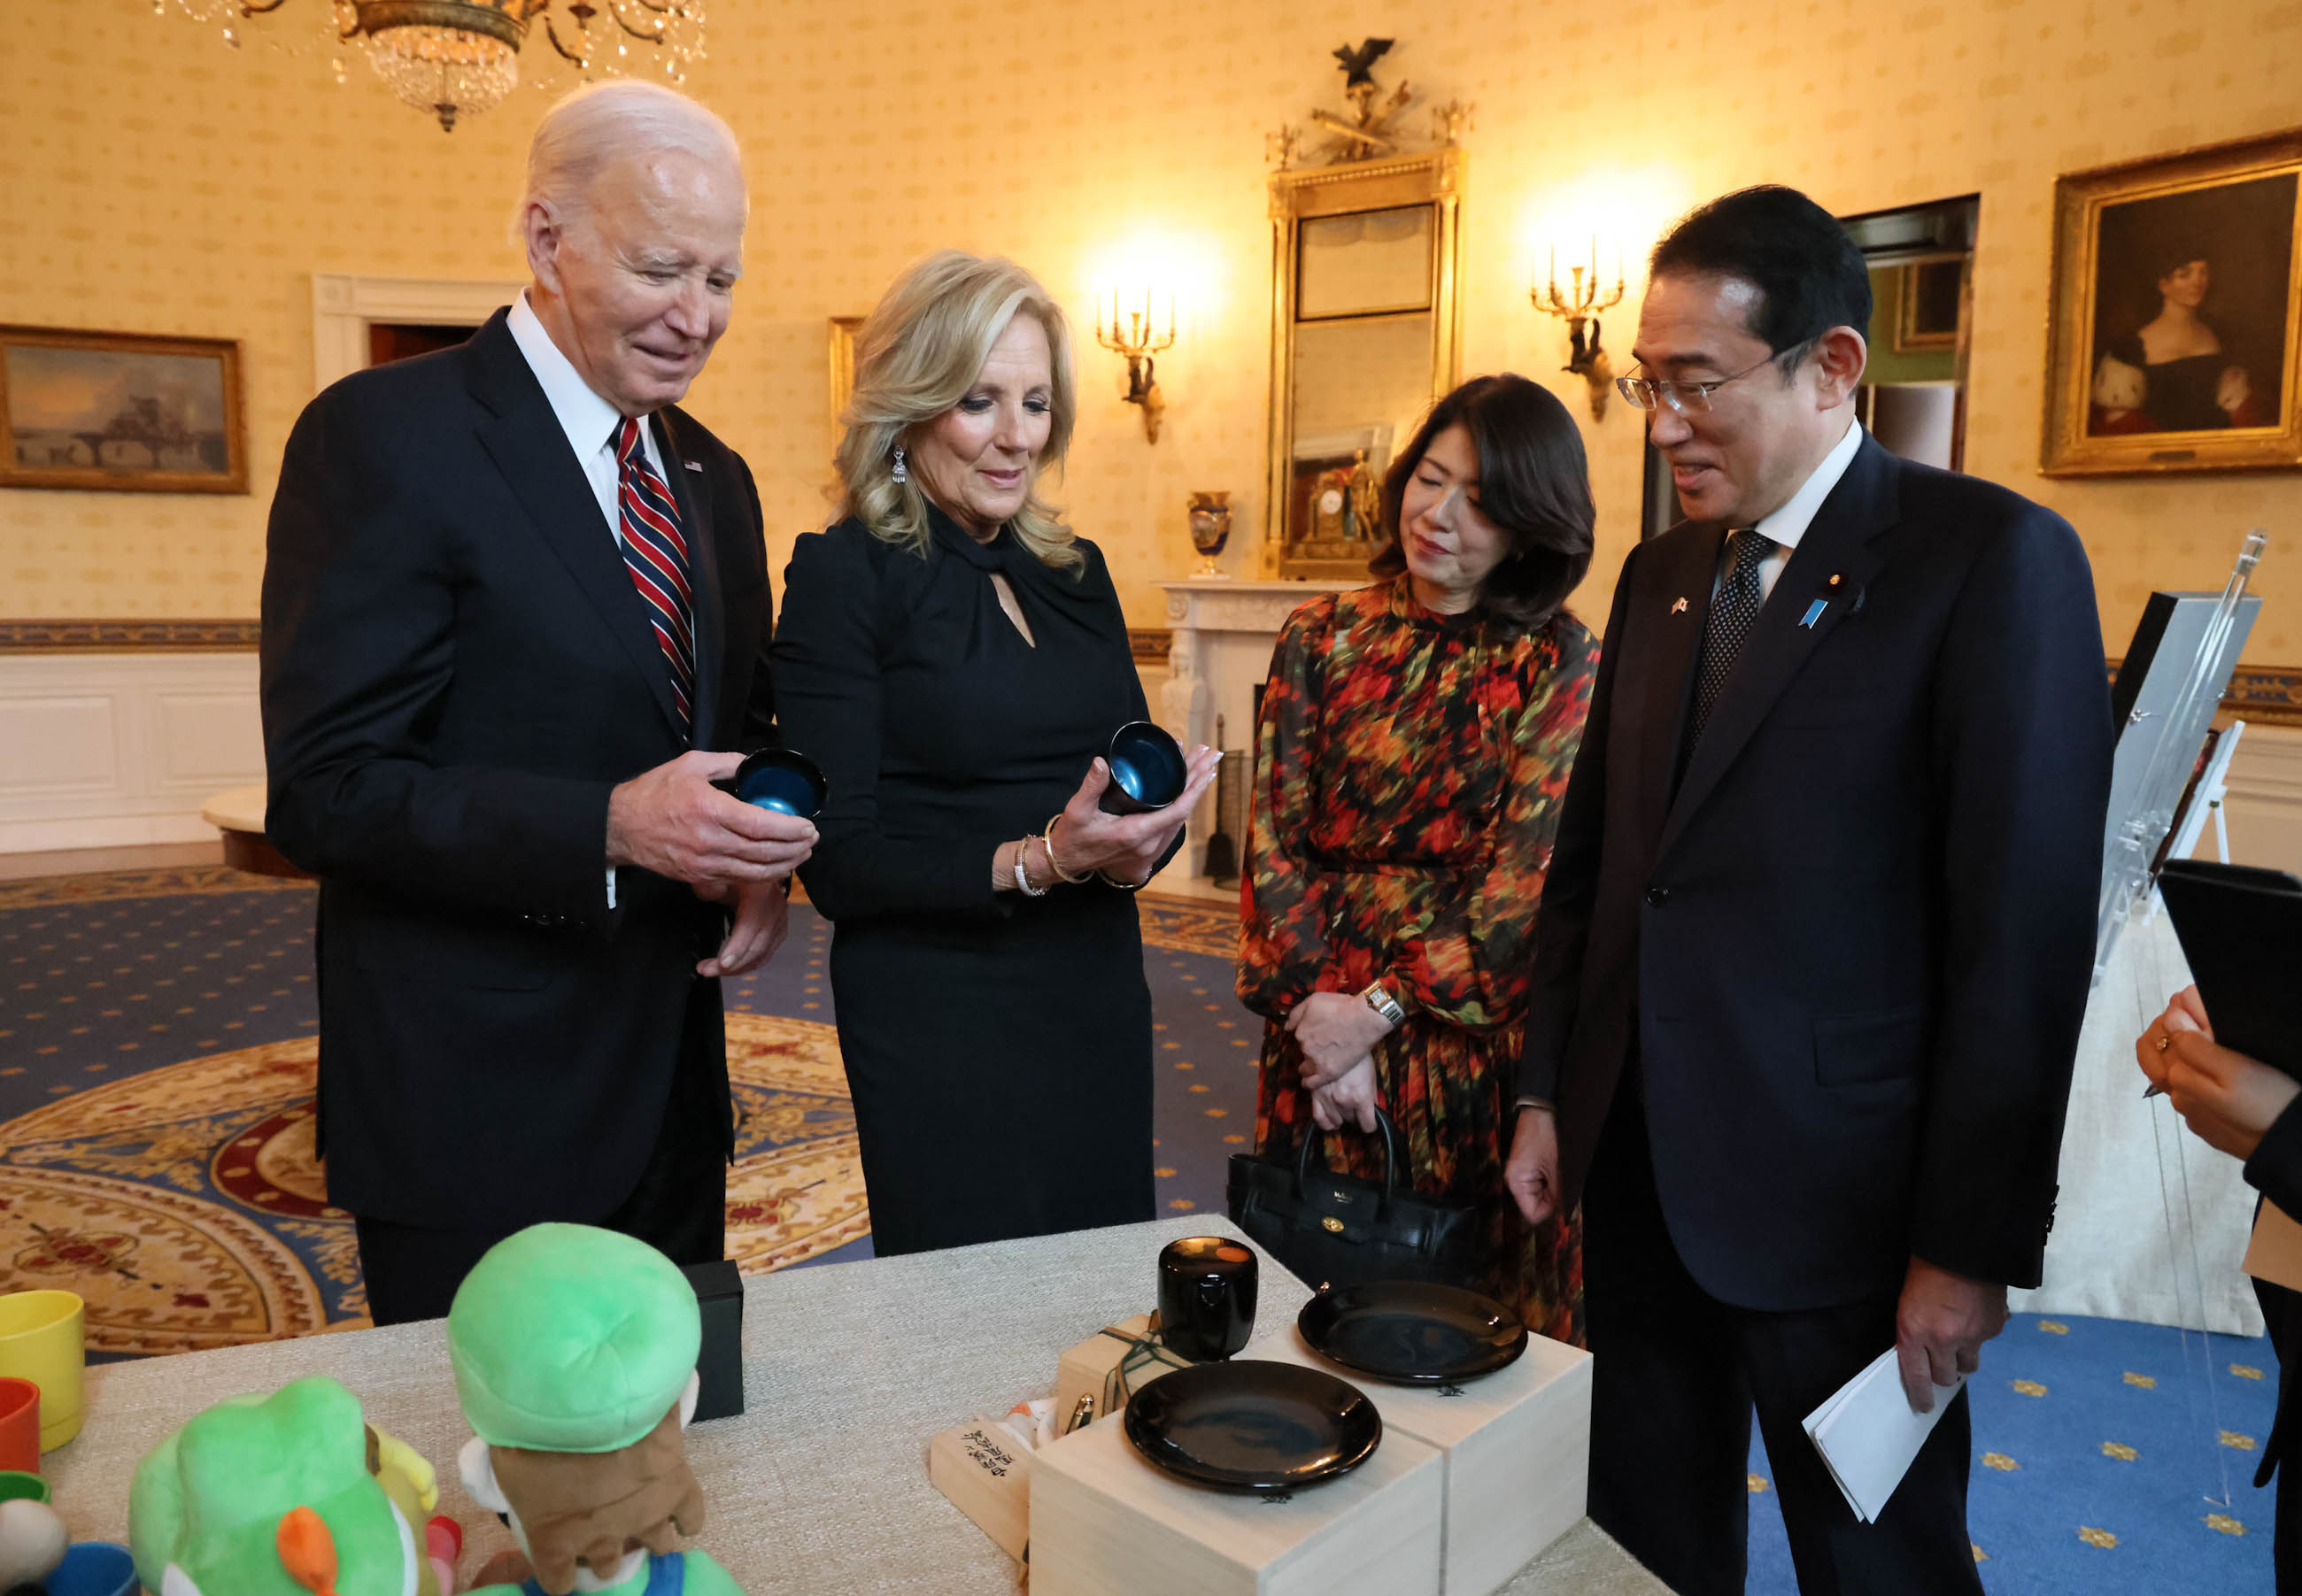 Event between Prime Minister Kishida, Mrs. Kishida, President Biden and Dr. Biden (2)